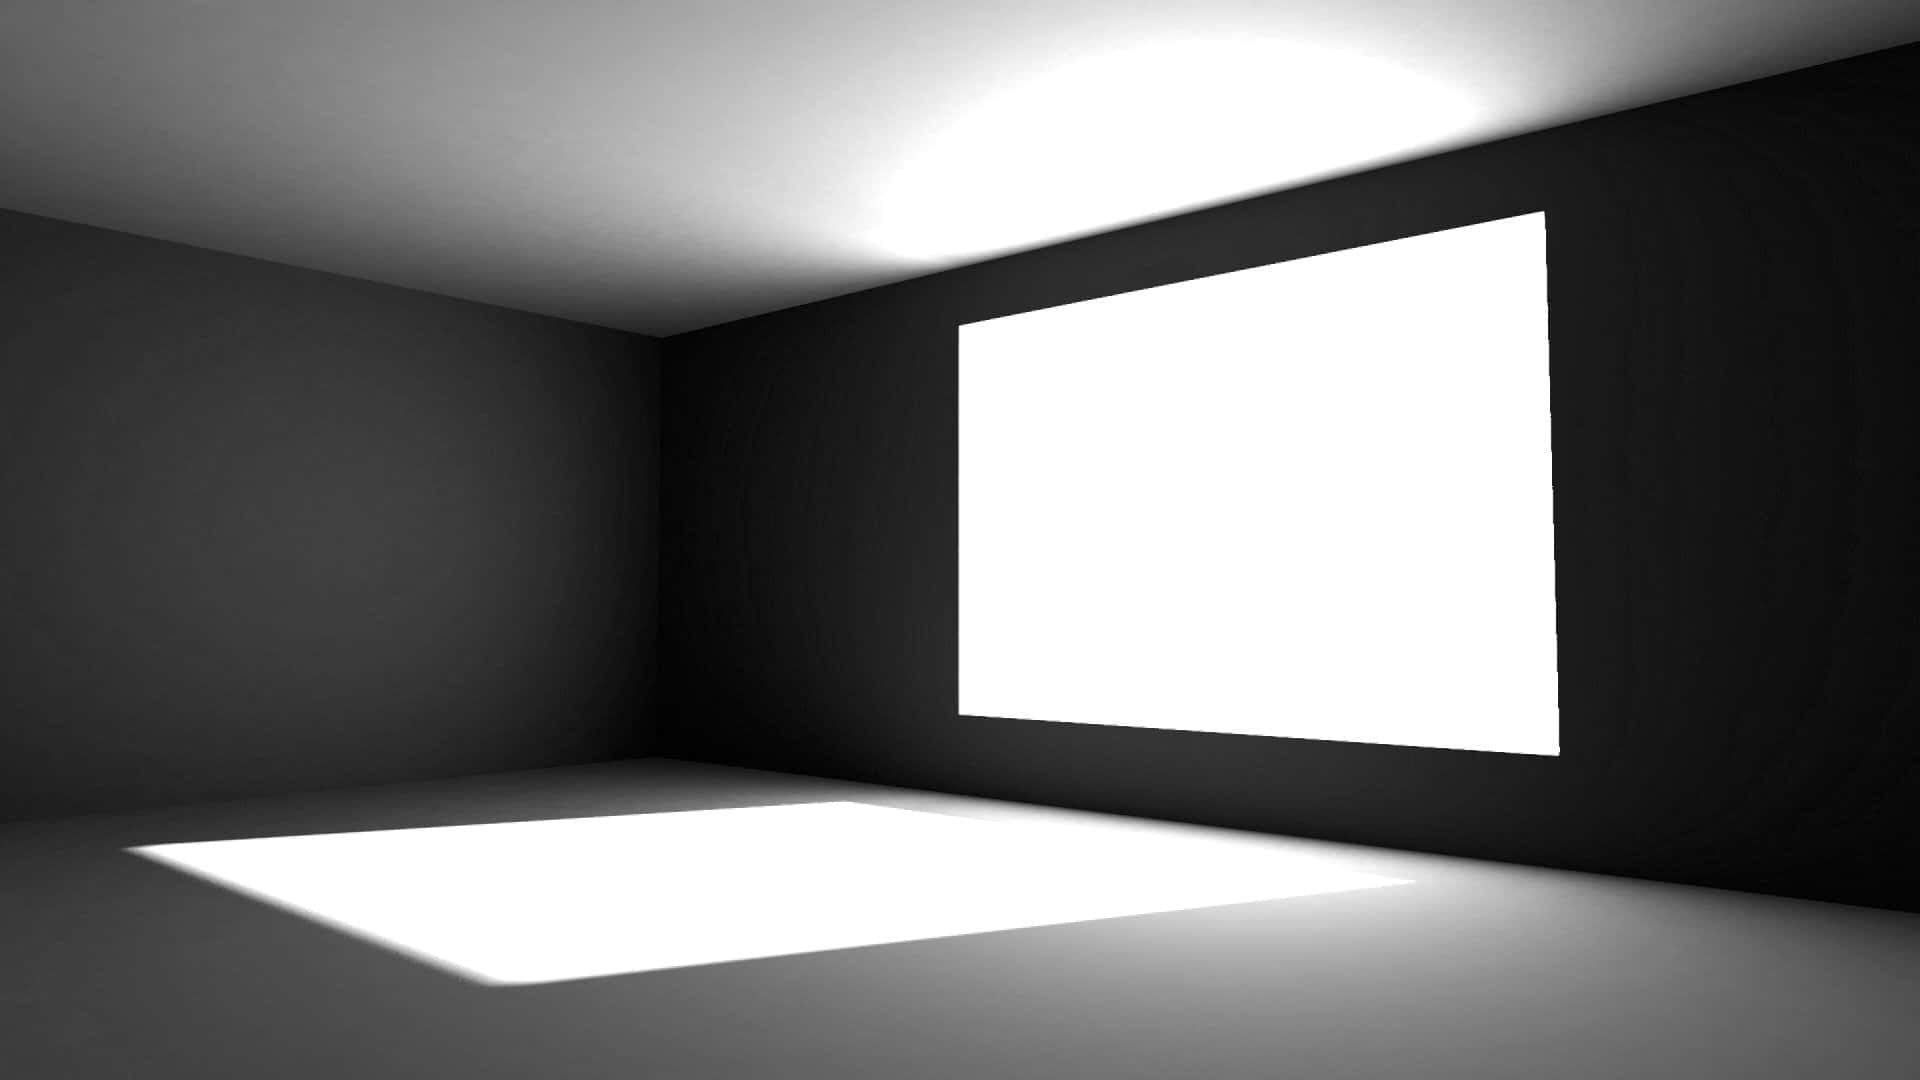 Monochrome Empty Room With Square Window Wallpaper